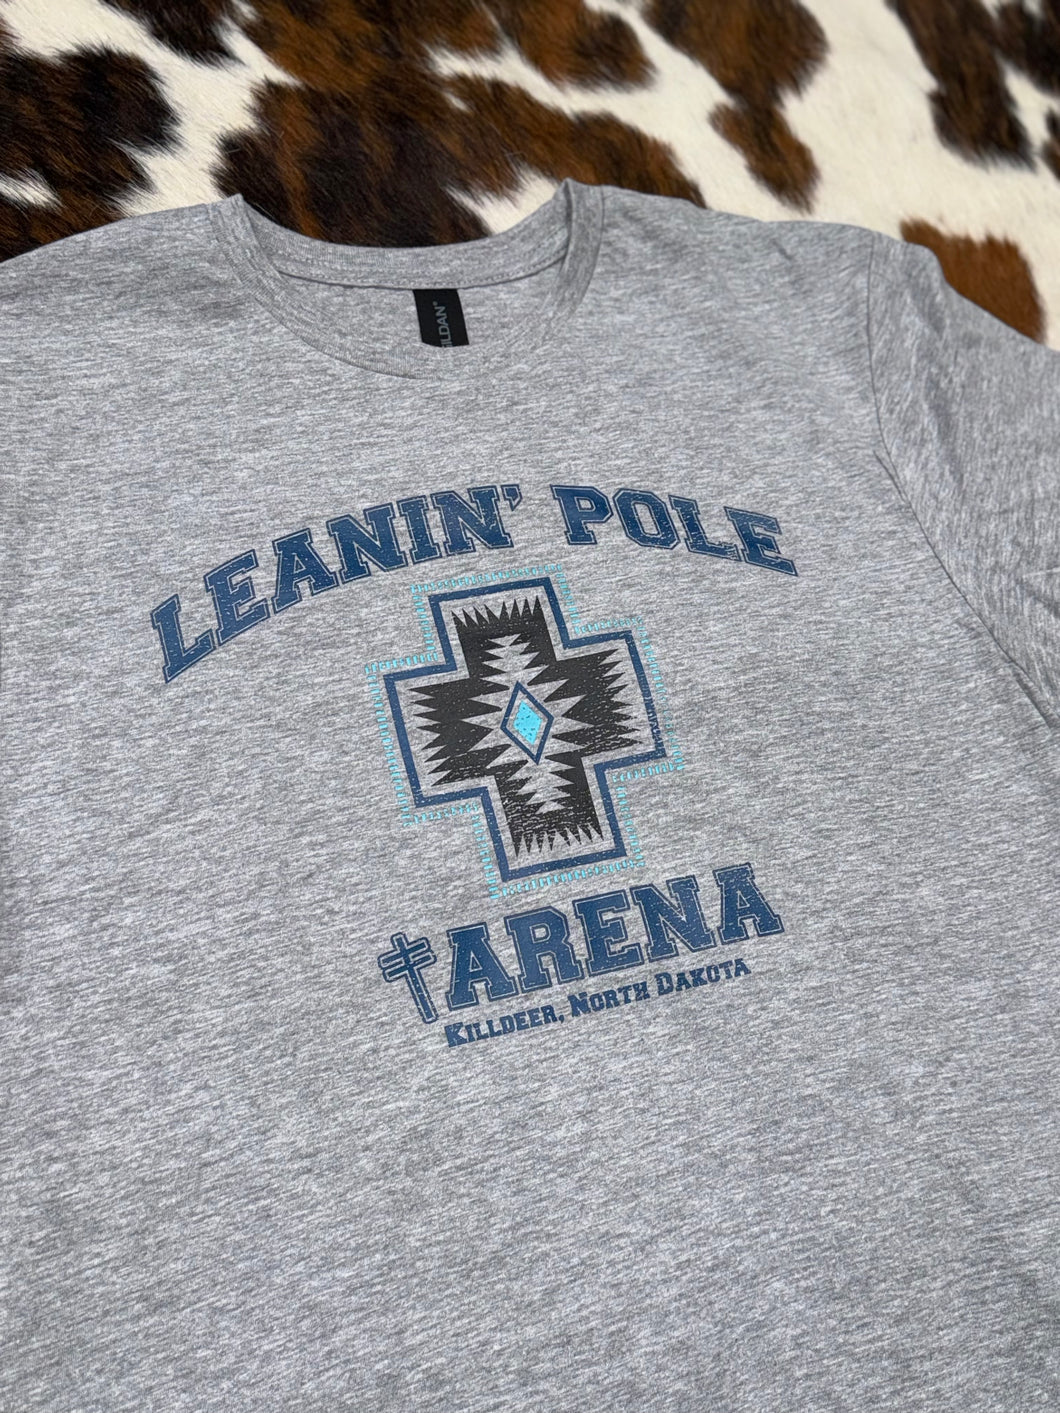 Leanin' Pole Arena Blue Harding Logo T-Shirt